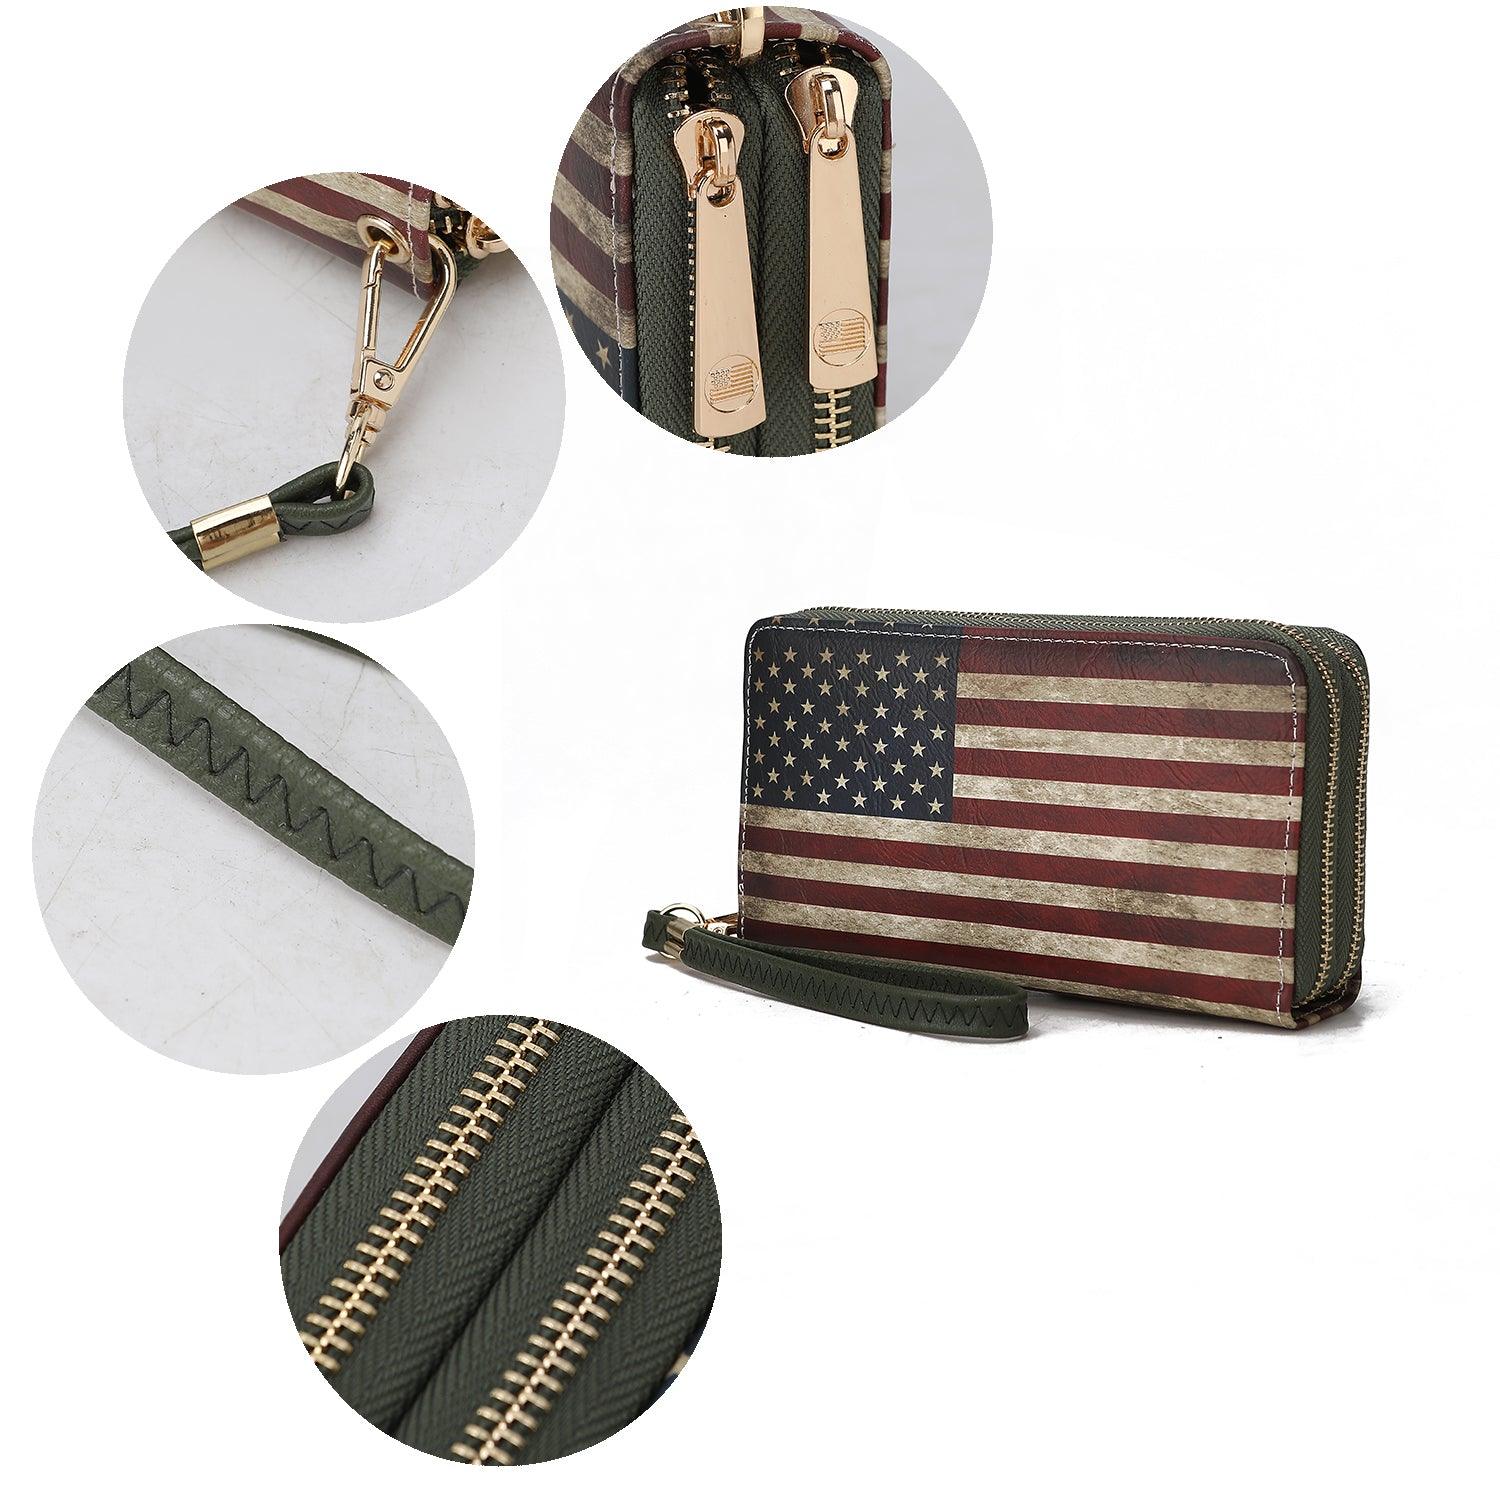 Wallets, Handbags & Accessories Uriel Vegan Leather Women’s FLAG Wristlet Wallet